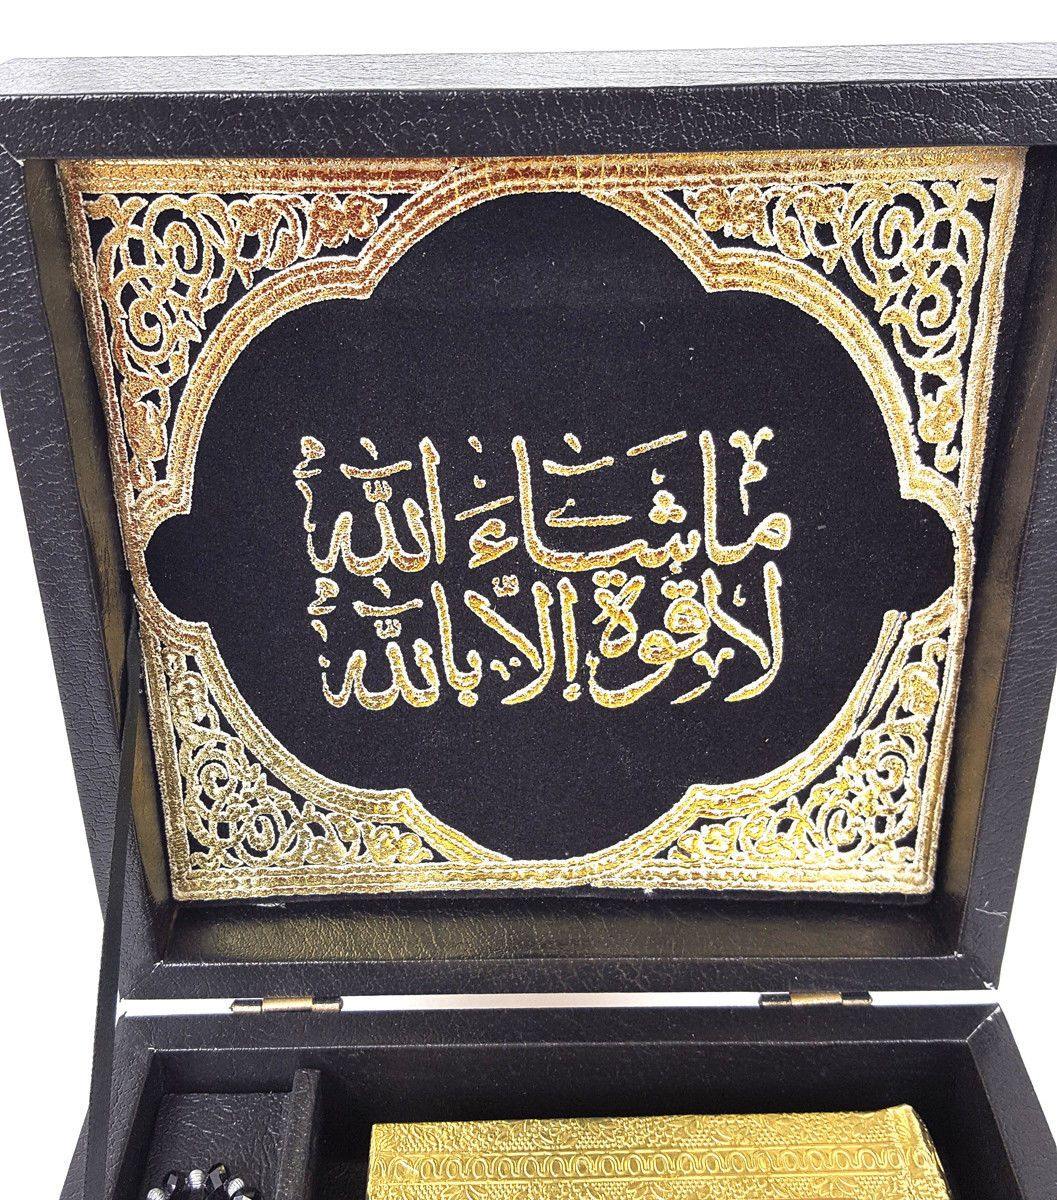 Holy Quran Koran Muslim Home Decor kaabah Kaaba Allah Muslim Islam - Arabian Shopping Zone